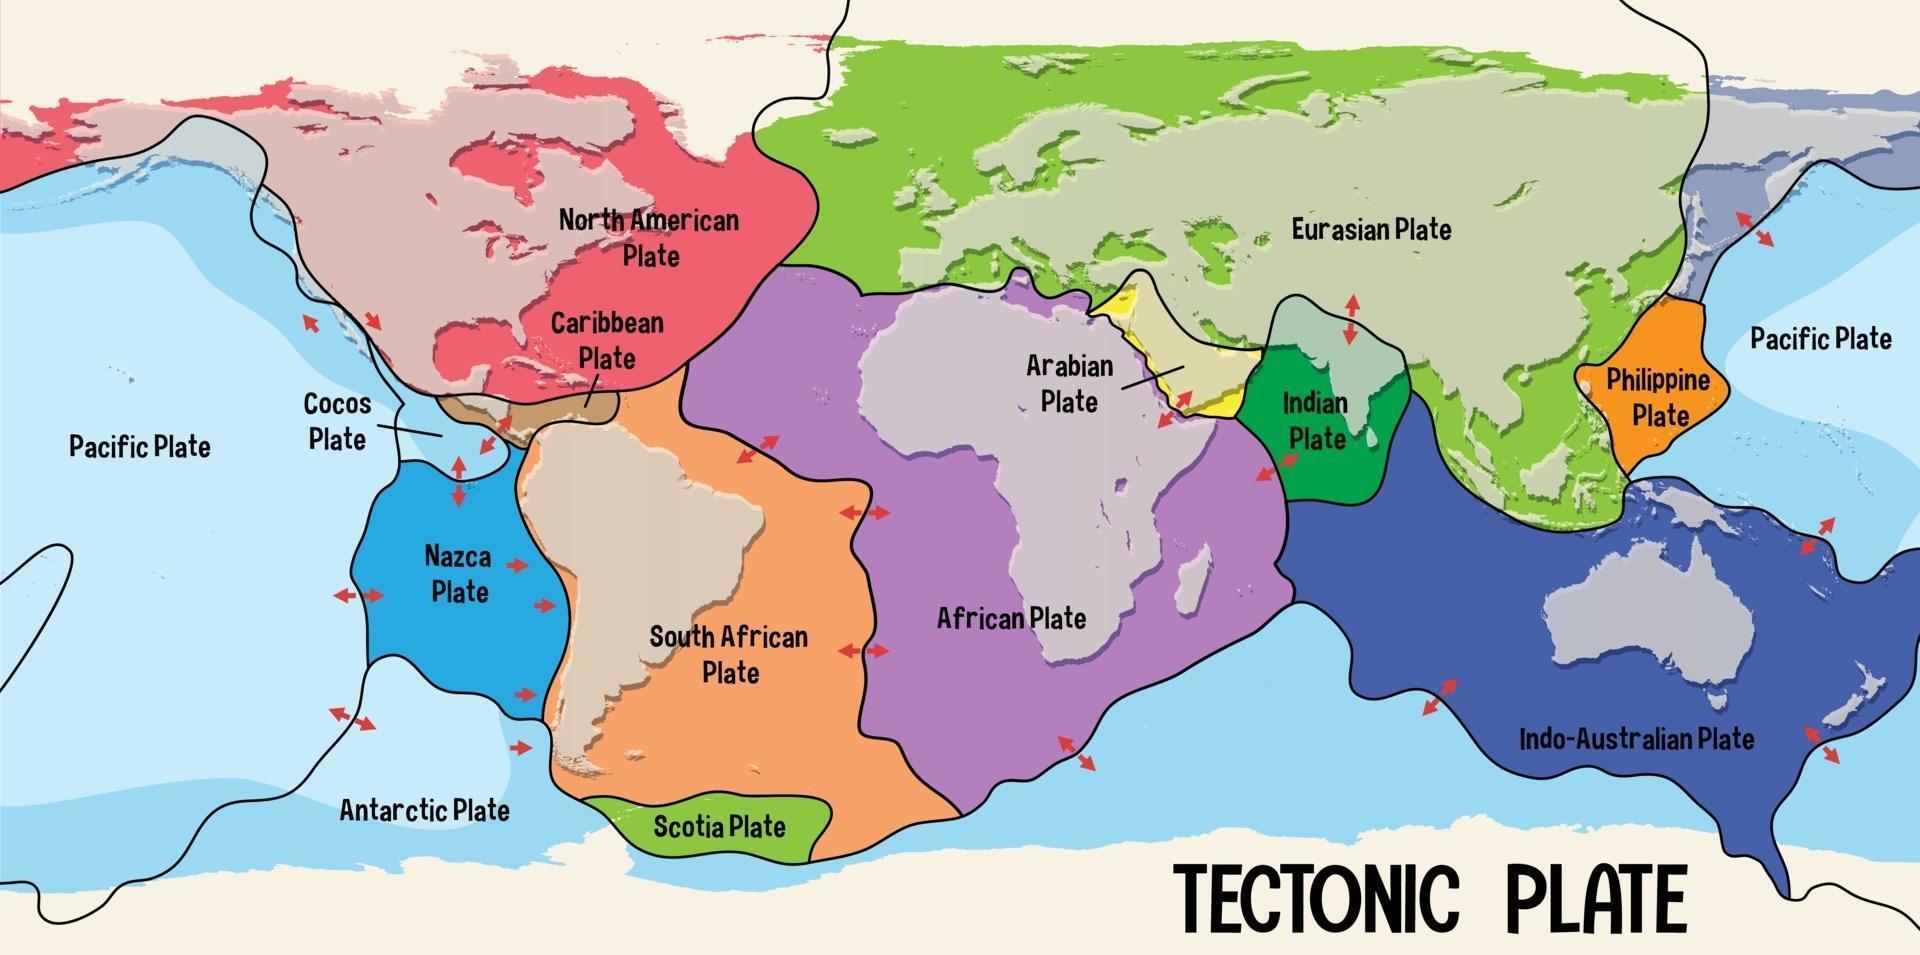 world-map-showing-tectonic-plates-boundaries-free-vector.jpg